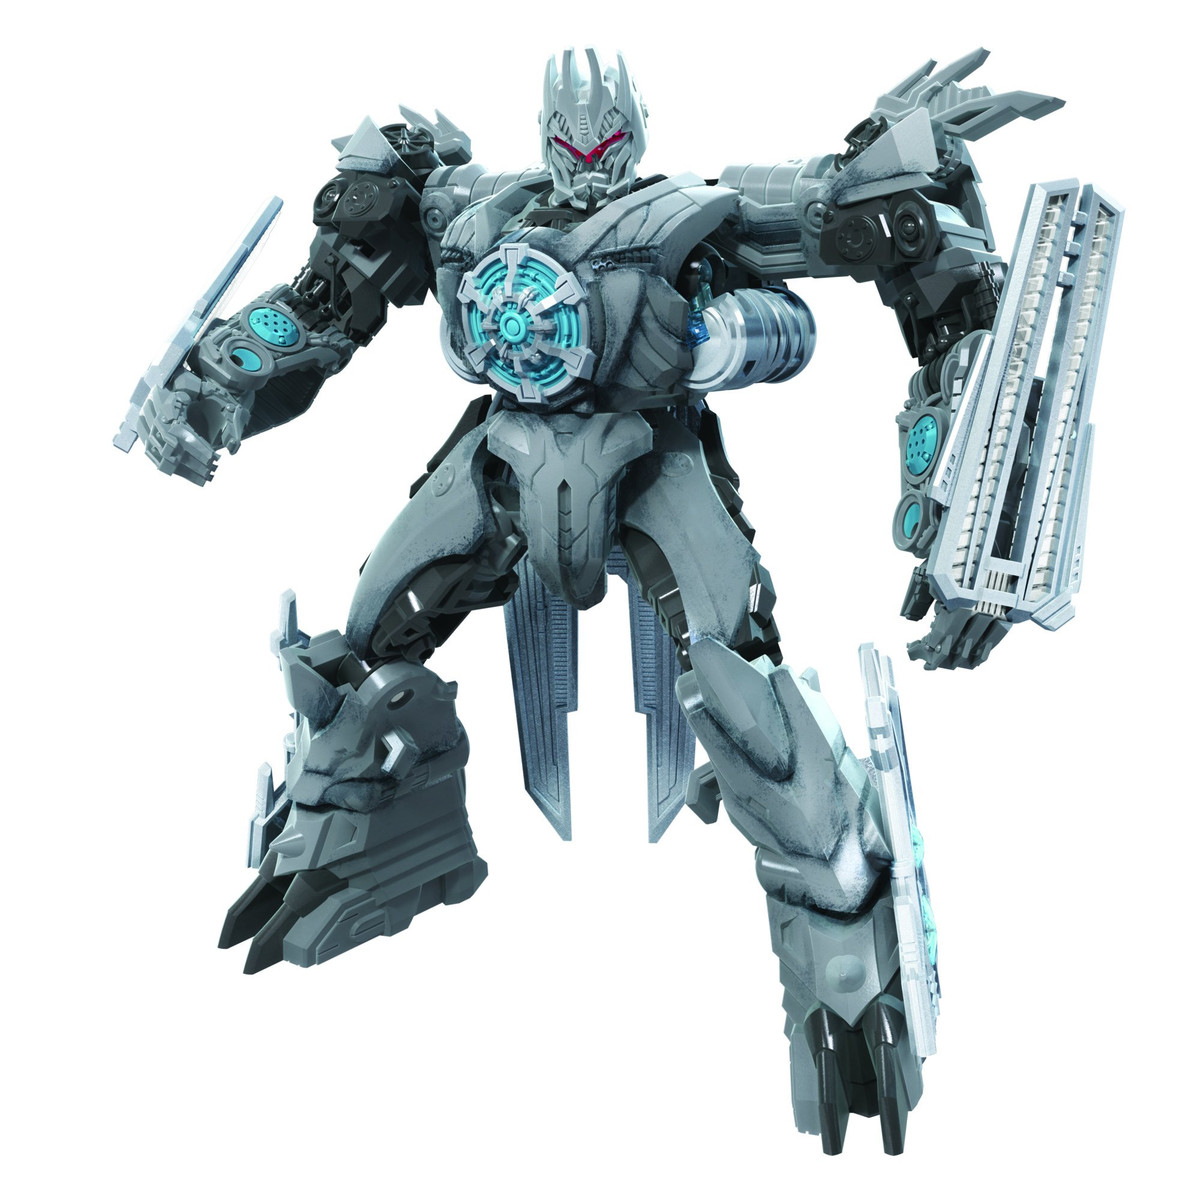 Transformers Toys Studio Series 88 Deluxe Transformers: Revenge of